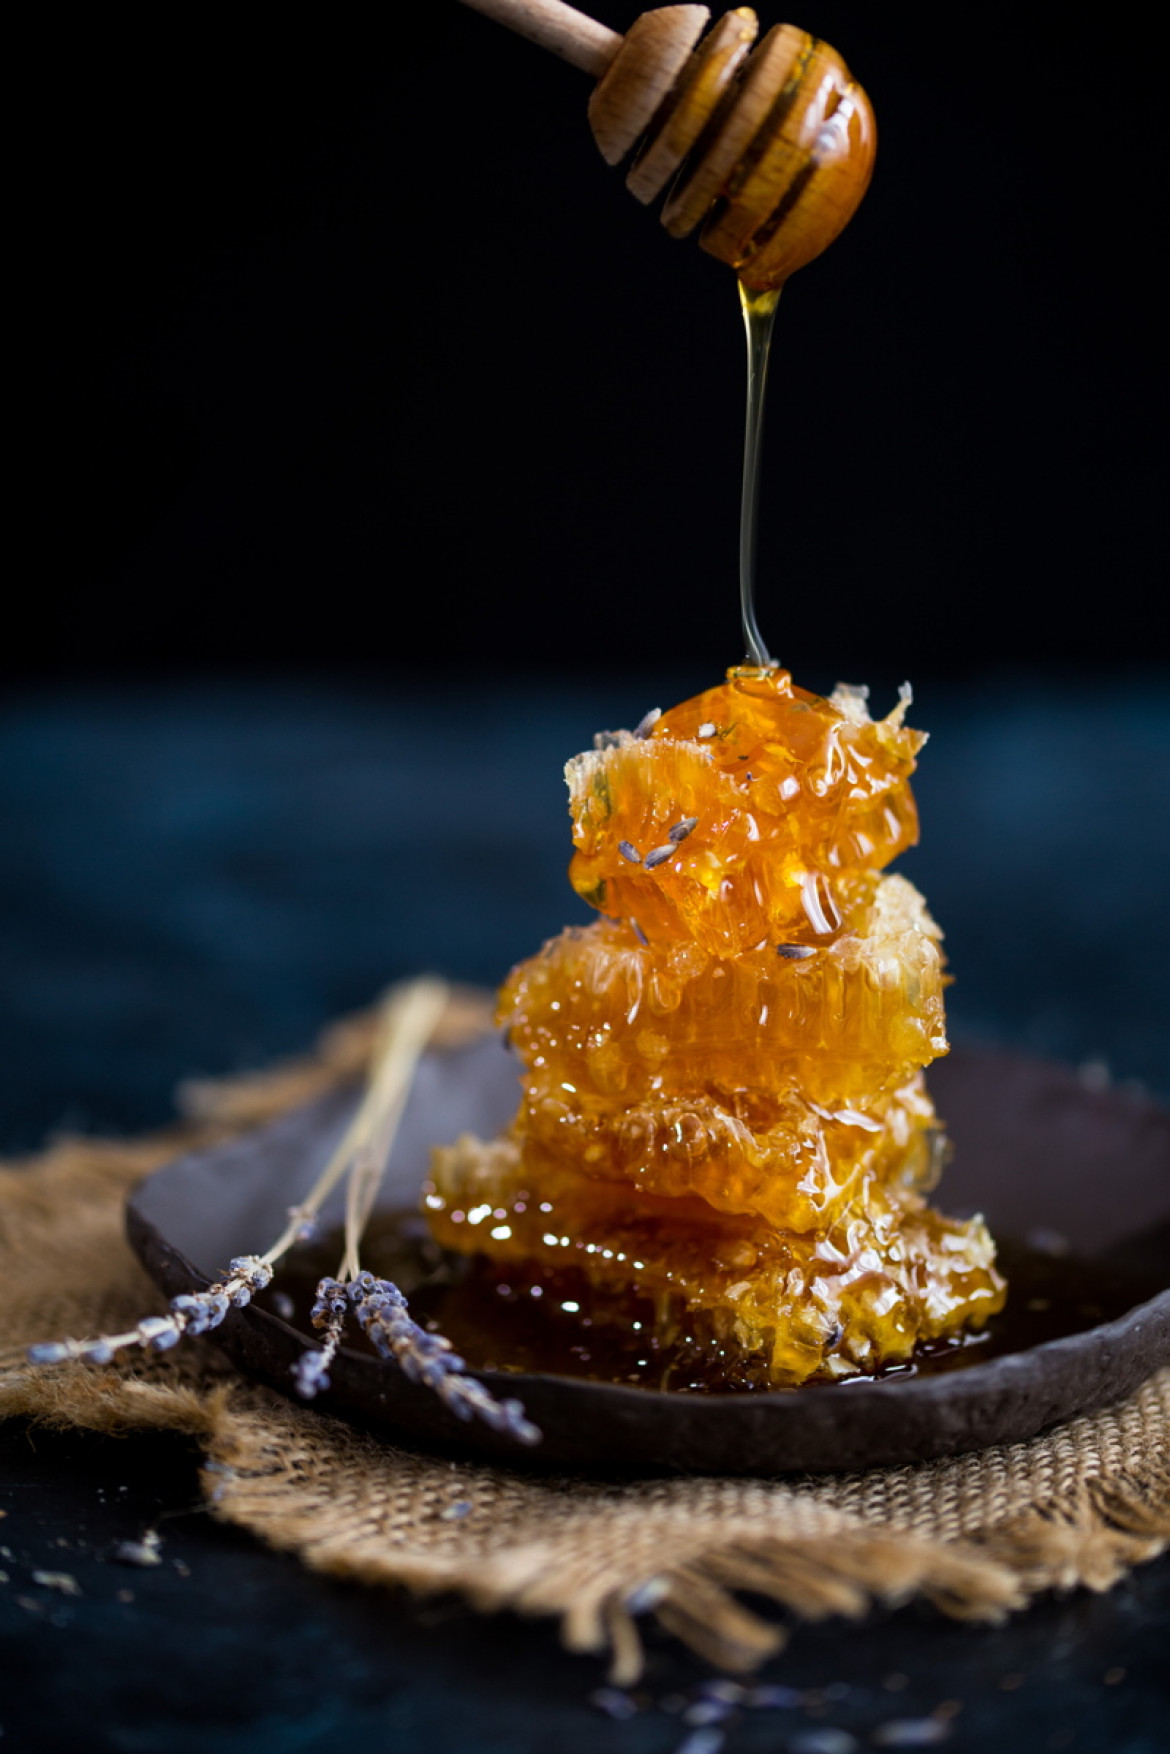 fot. Aniko Lueff, "Honeycomb", 1. miejsce w kategorii Food Bloggers